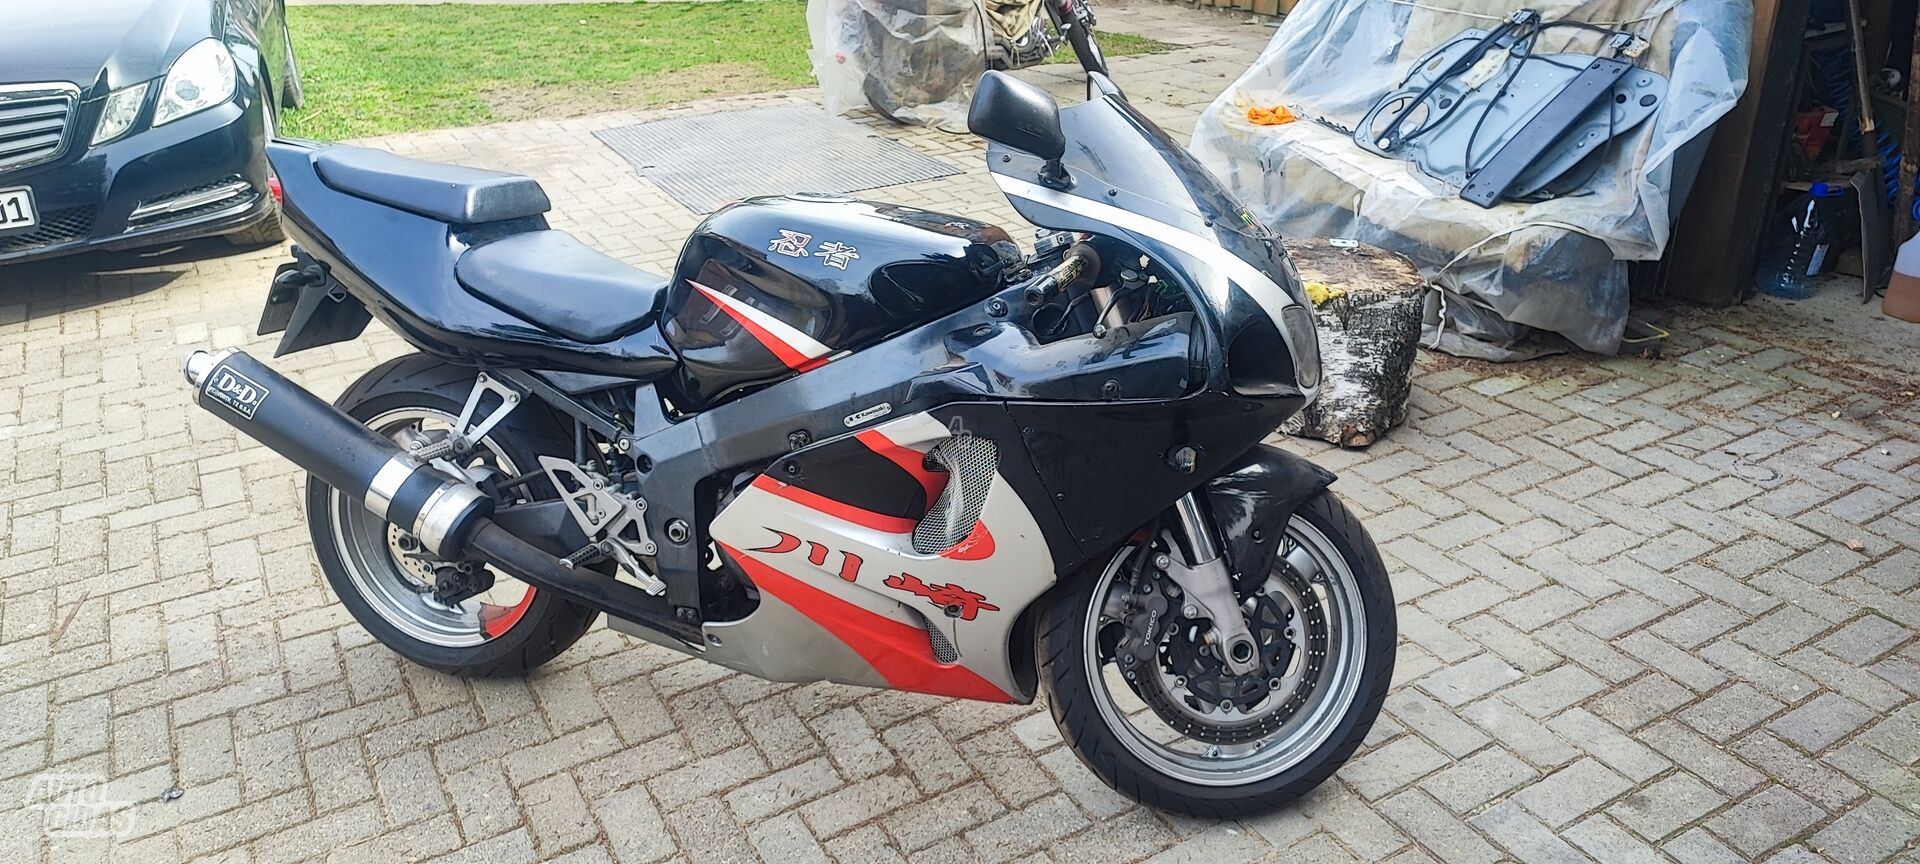 Kawasaki ZX 1999 y Sport / Superbike motorcycle